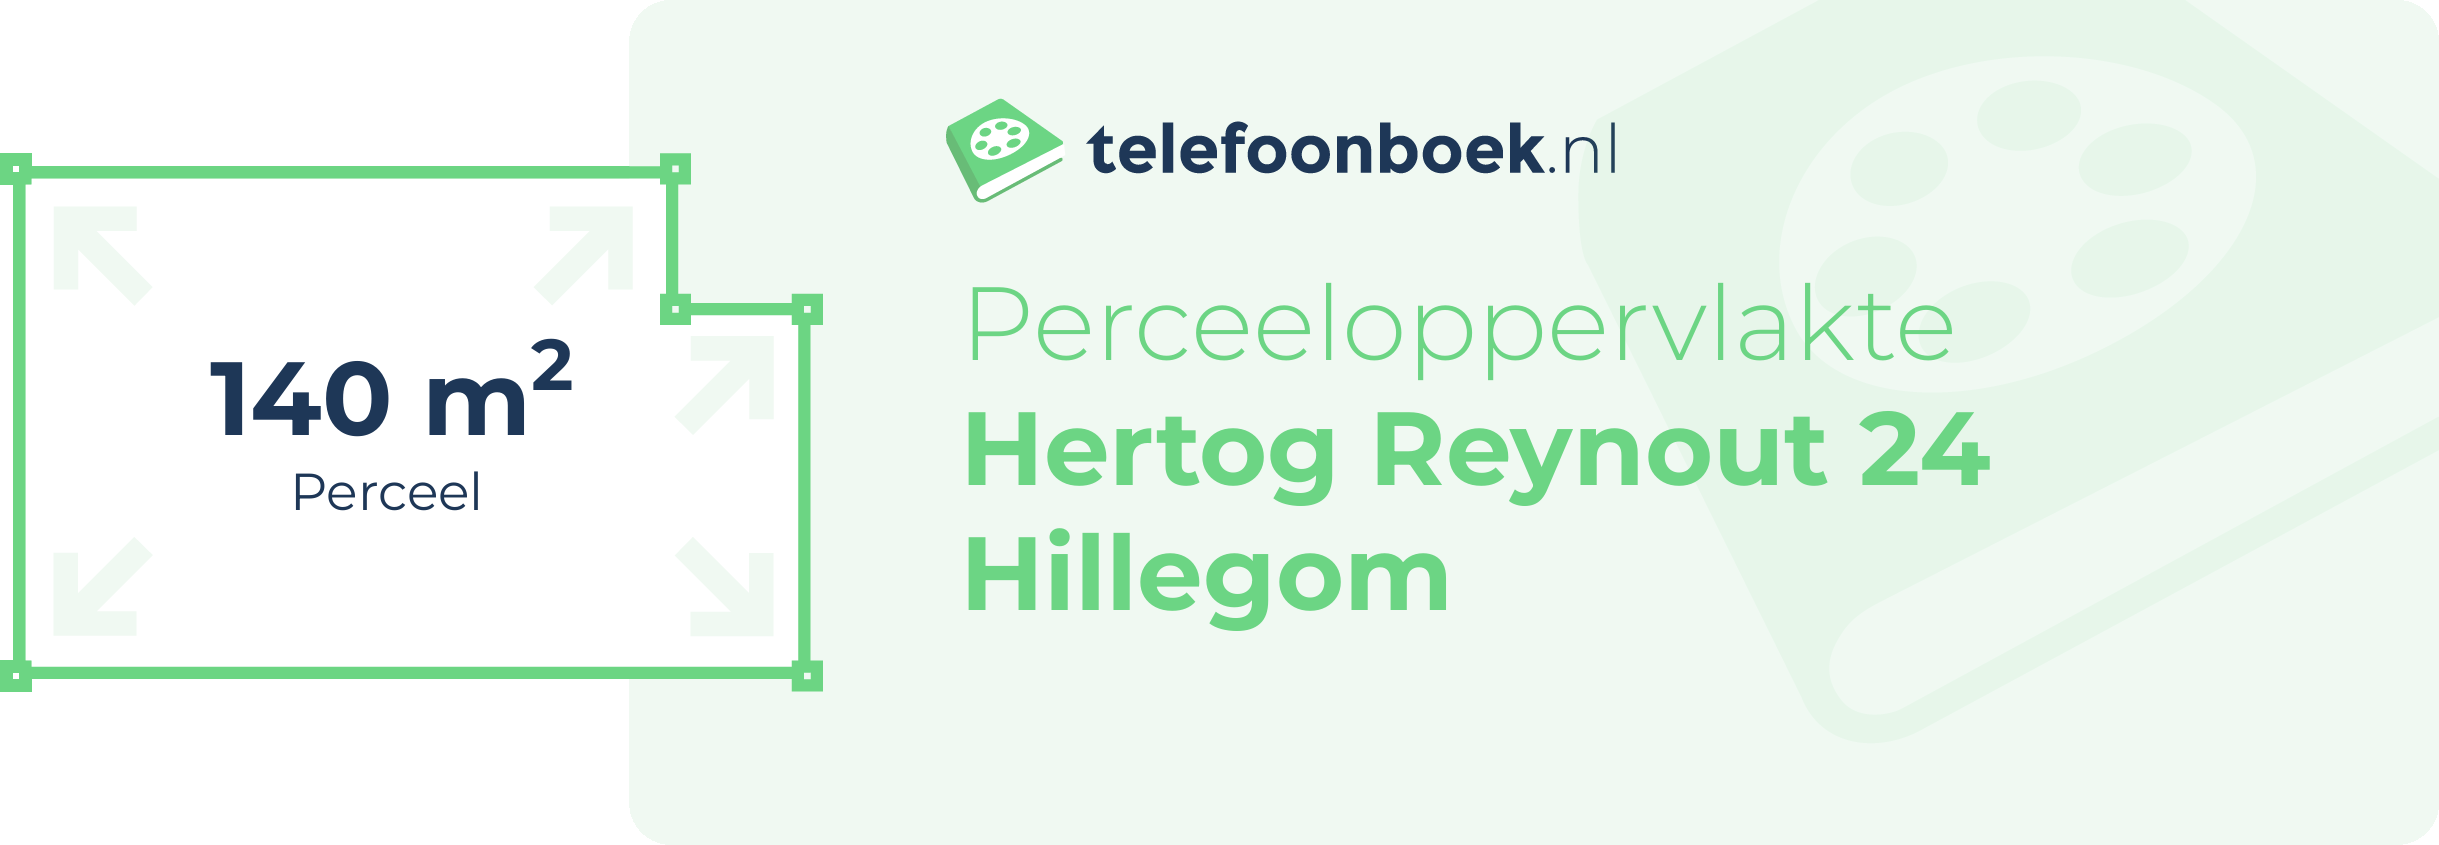 Perceeloppervlakte Hertog Reynout 24 Hillegom